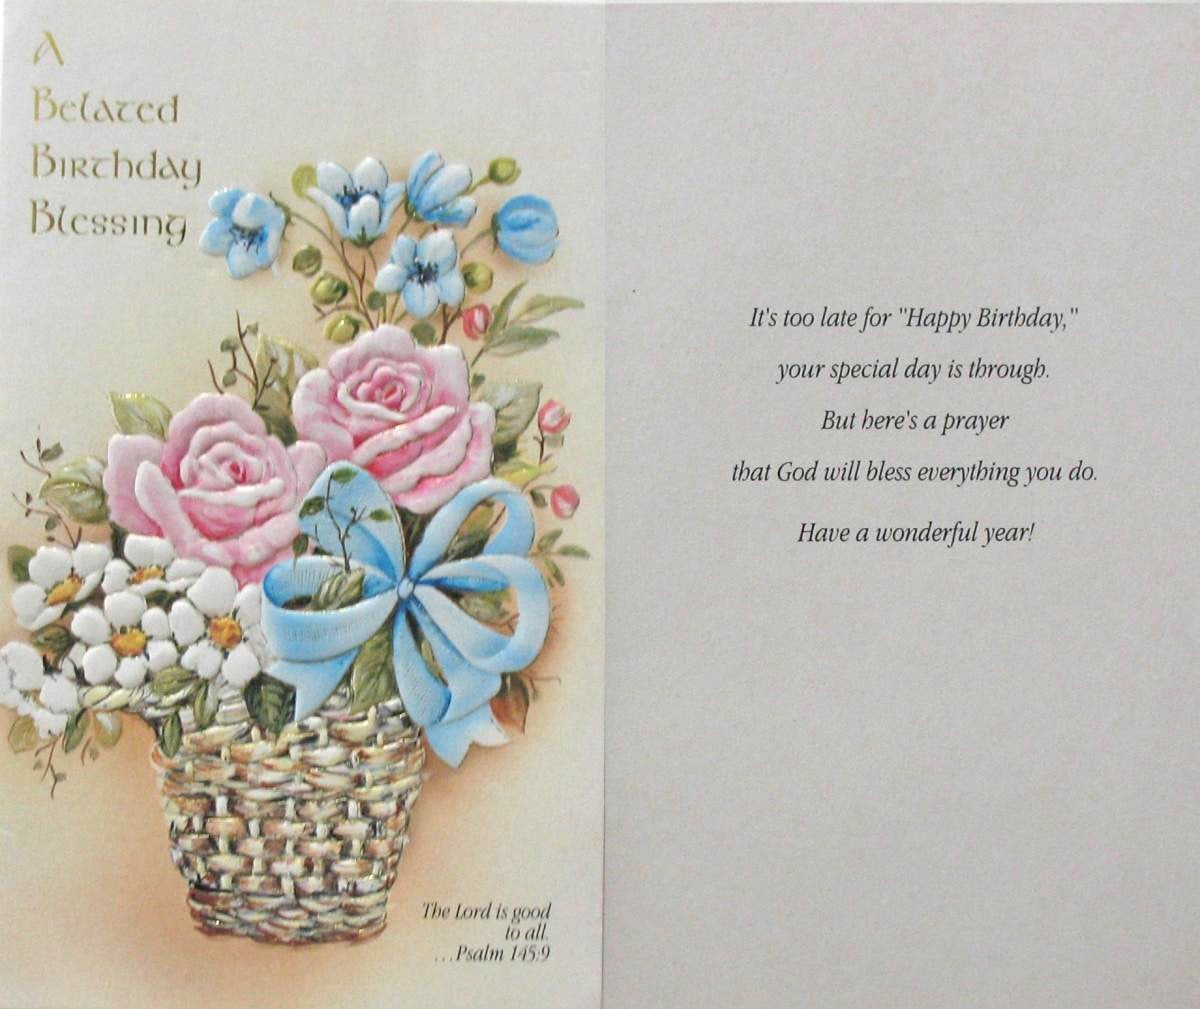 Belated Birthday Greeting Card